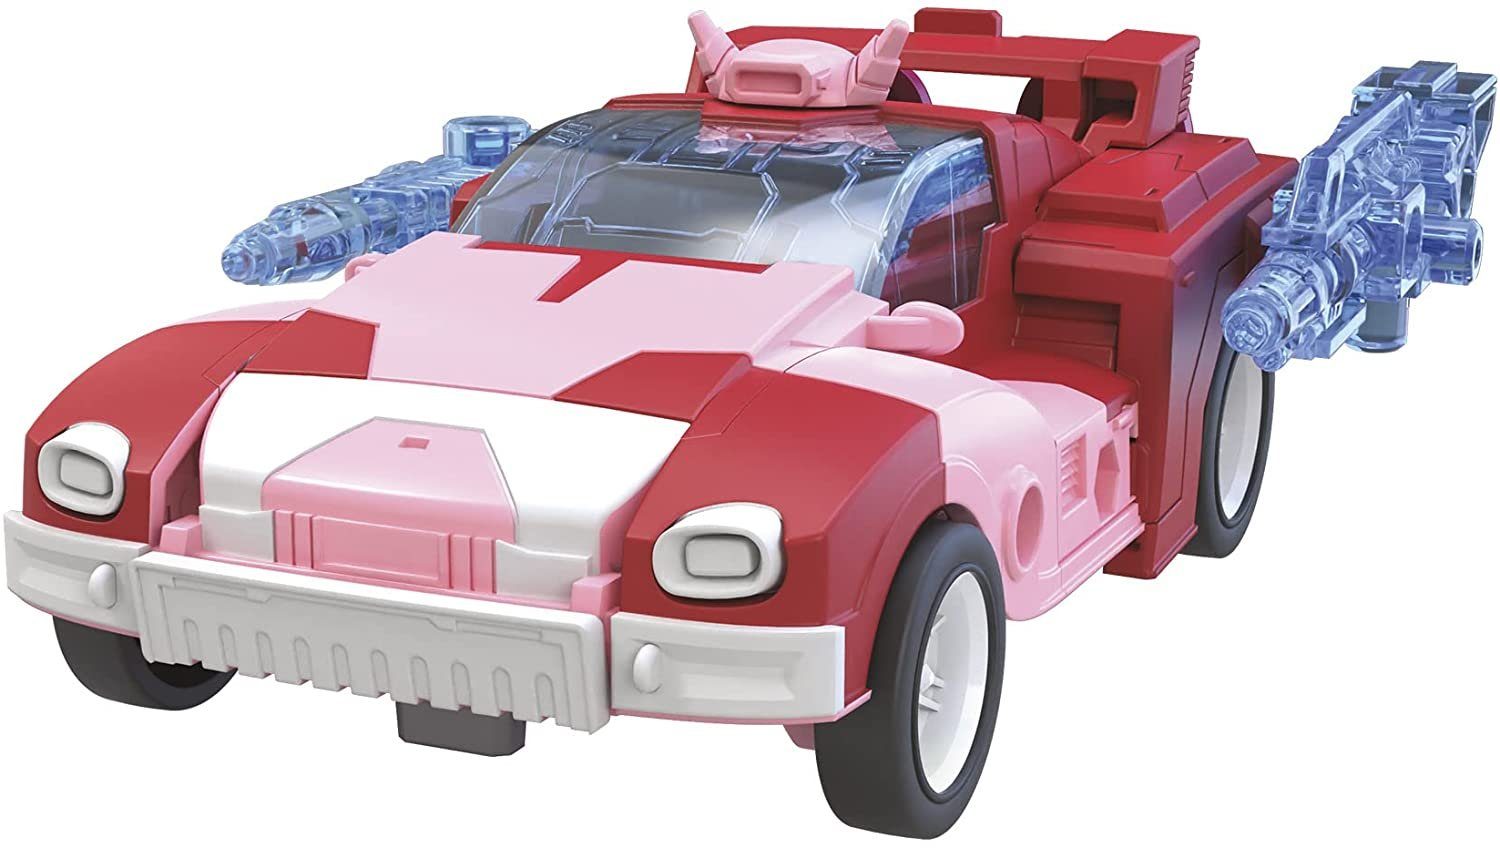 Hasbro - Elita-1 Legacy Transformers Deluxe Actionfigur Class -